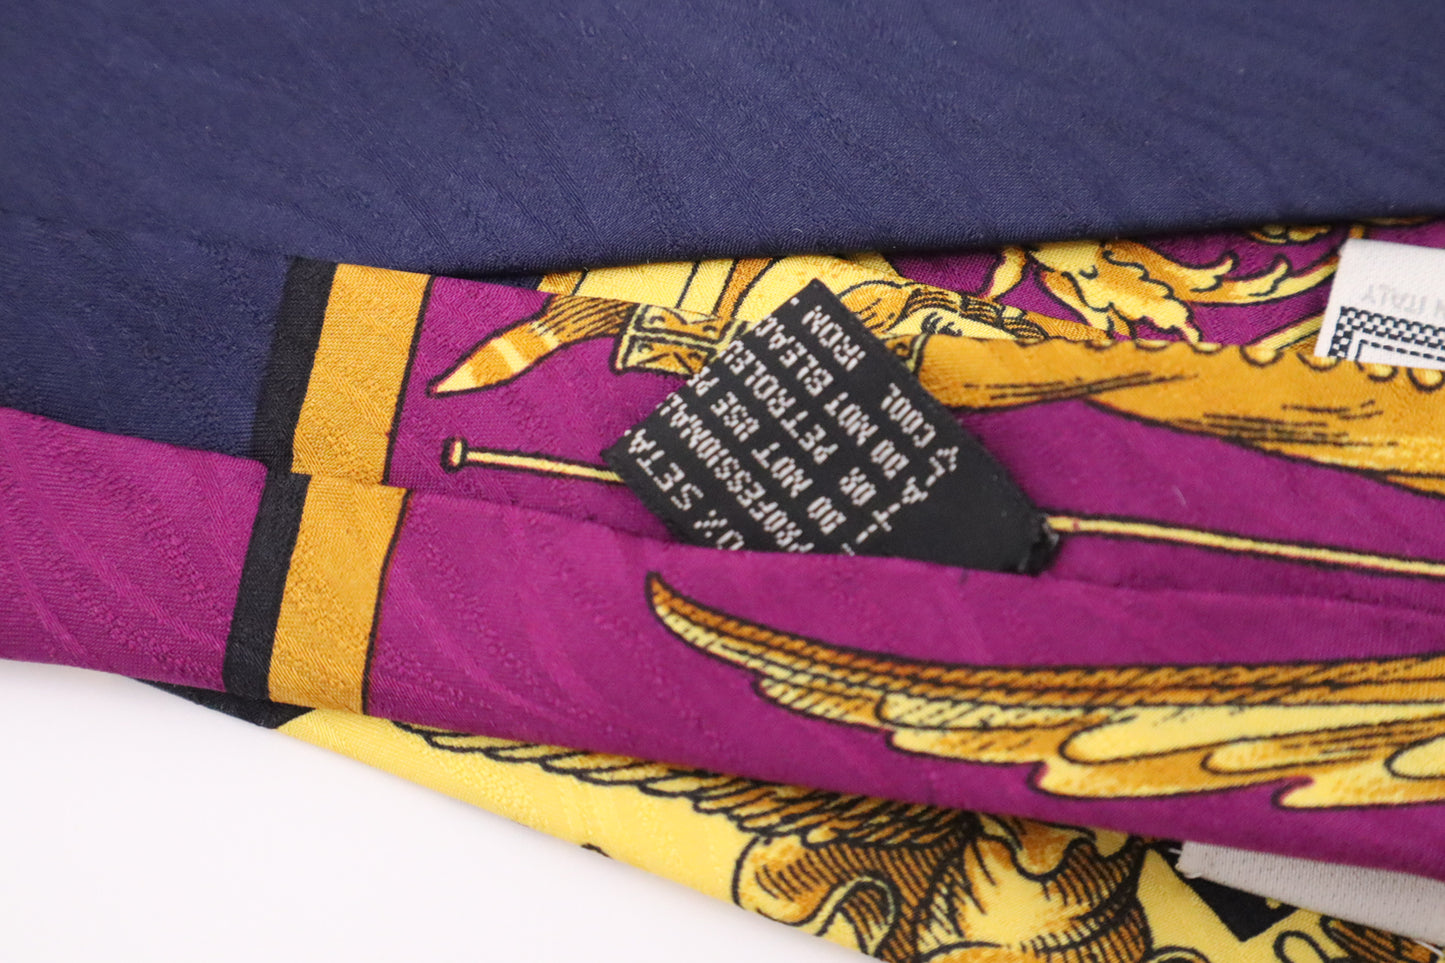 Versace Tie in Blue, Purple, & Gold Silk